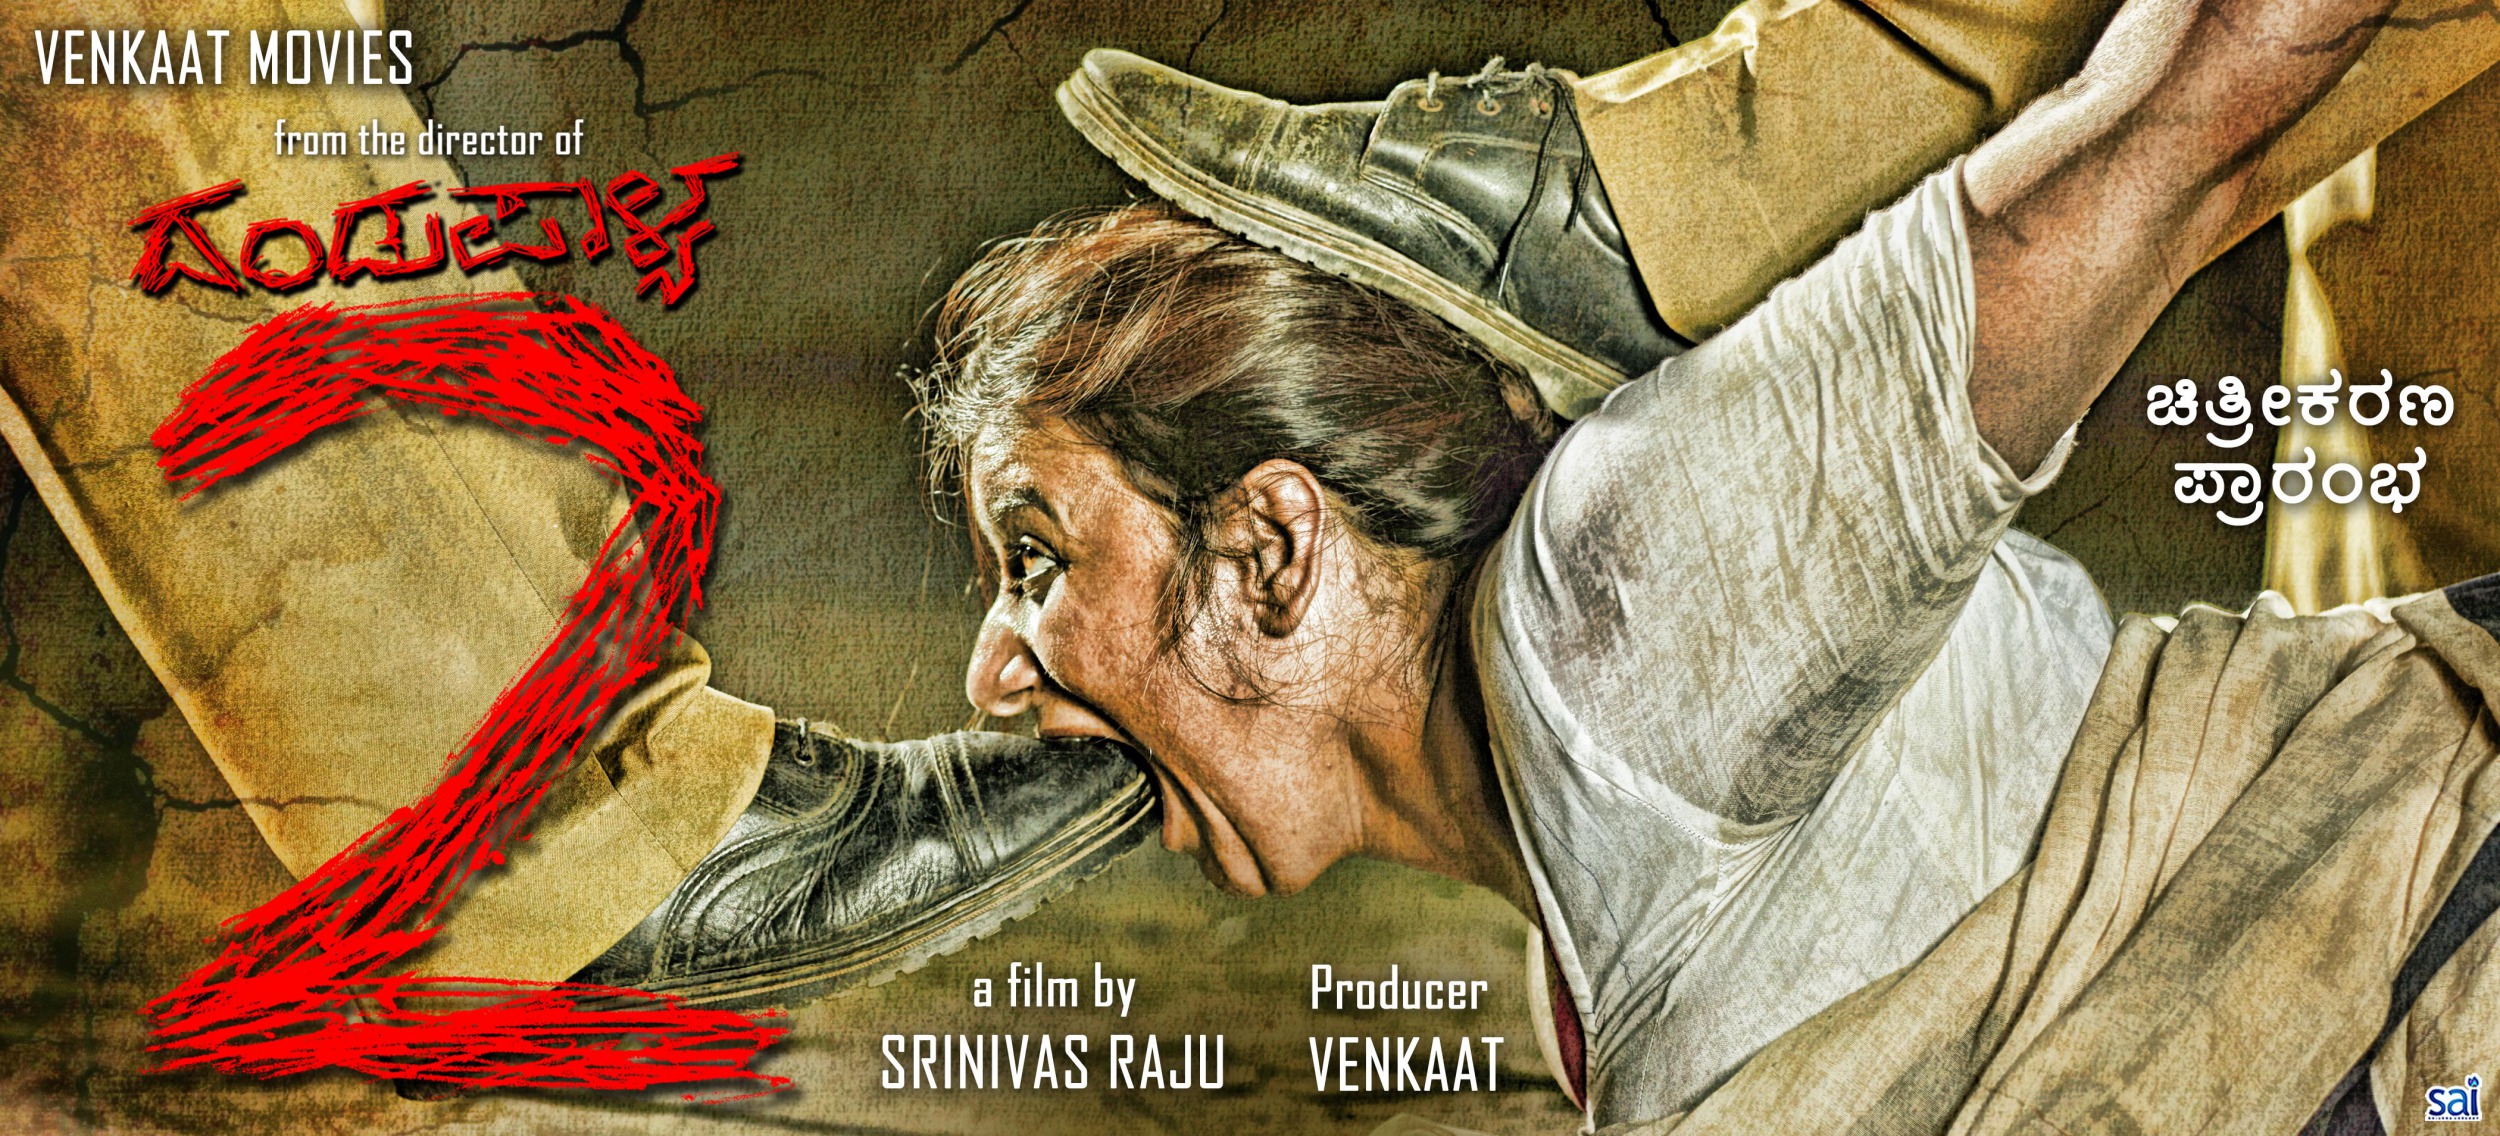 Mega Sized Movie Poster Image for Dhandupalya 2 (#2 of 8)